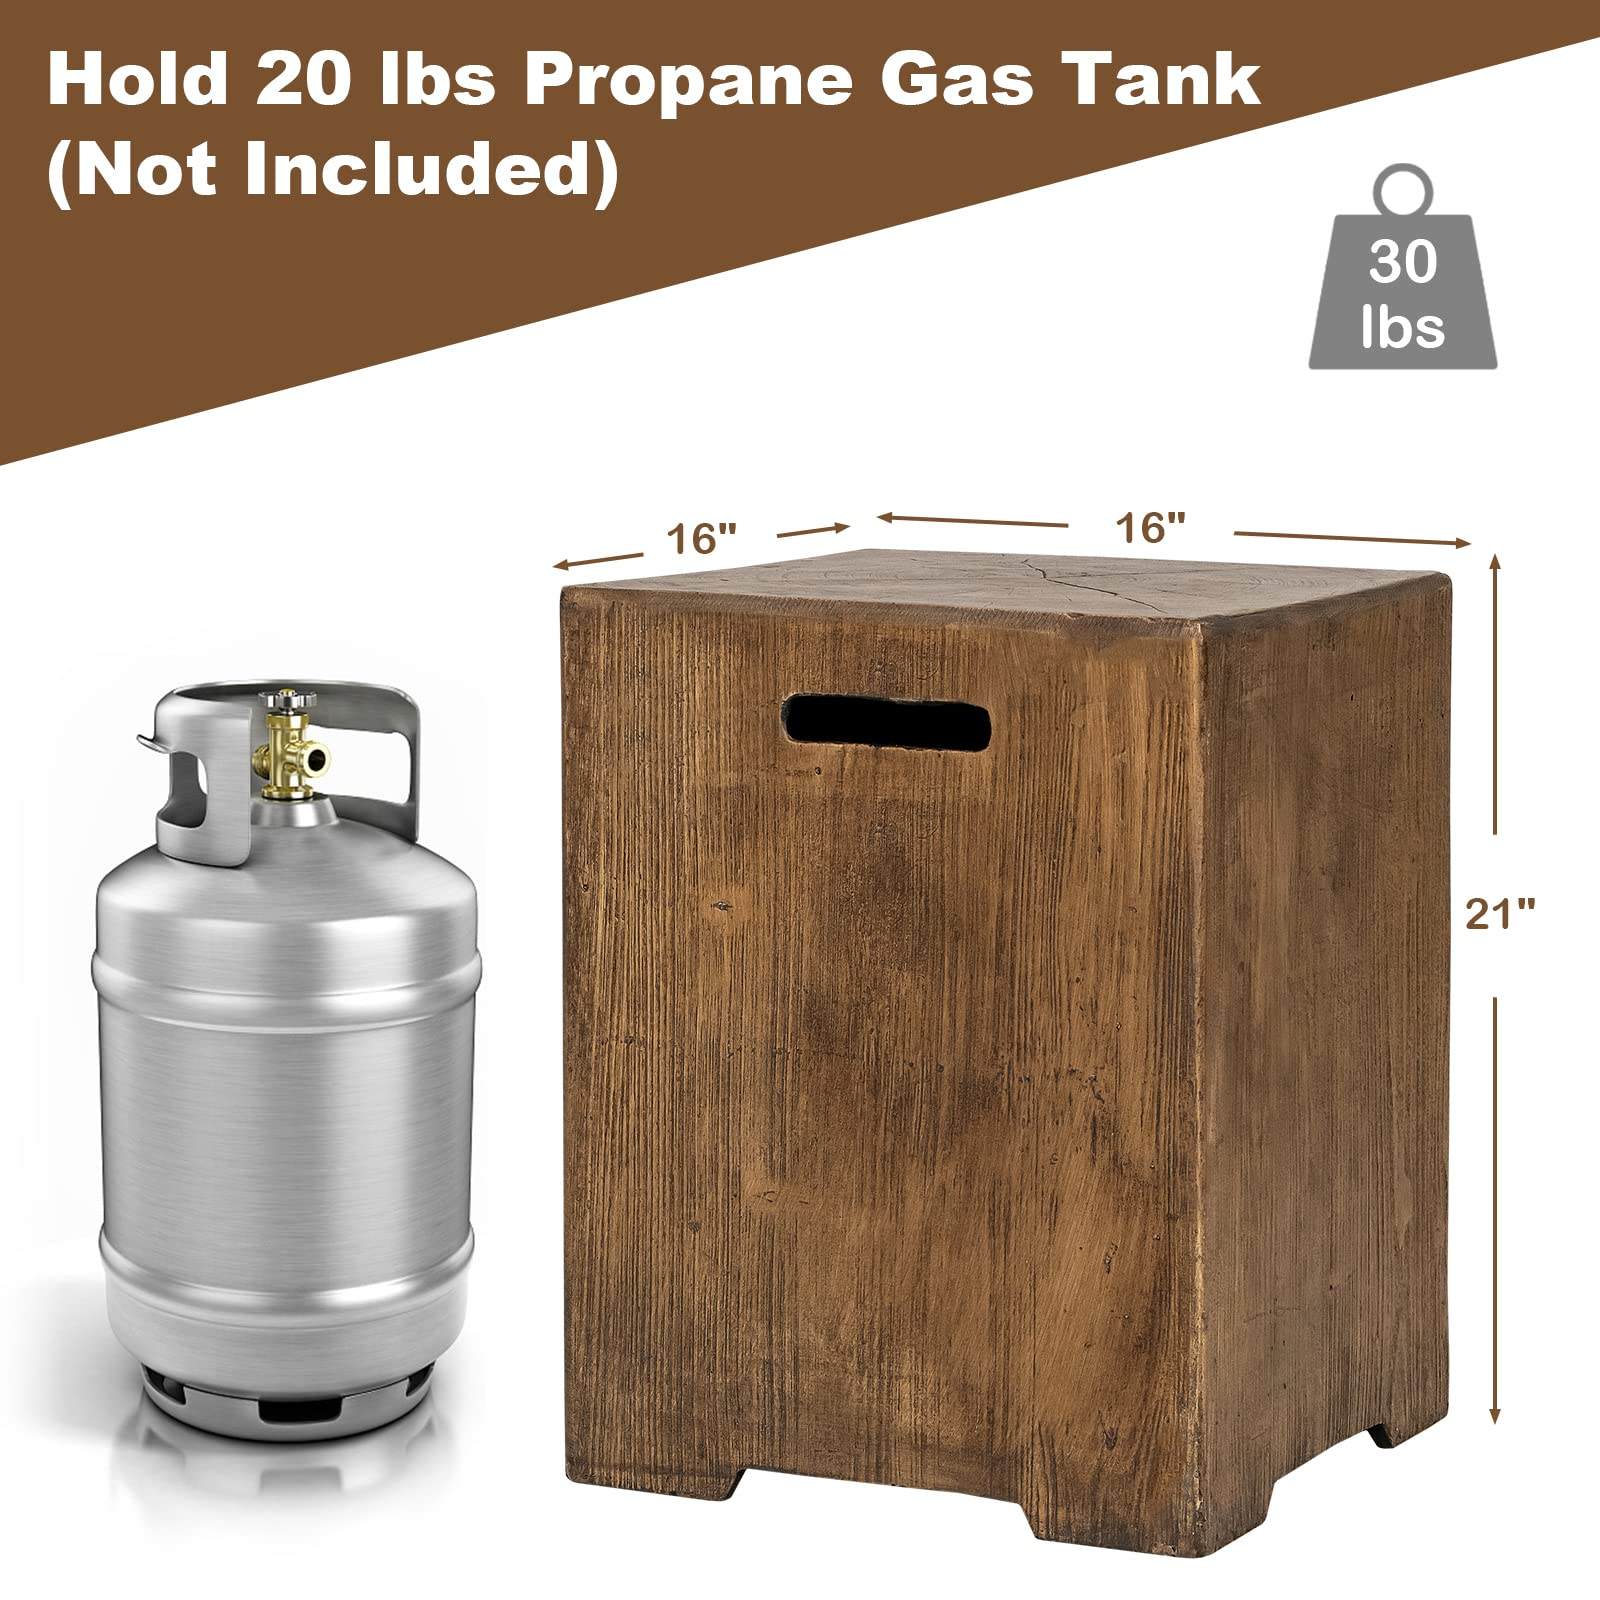 Giantex Outdoor Tank Hideaway Table, Propane Tank Cover for Standard 20 LBS Propane Gas Tank